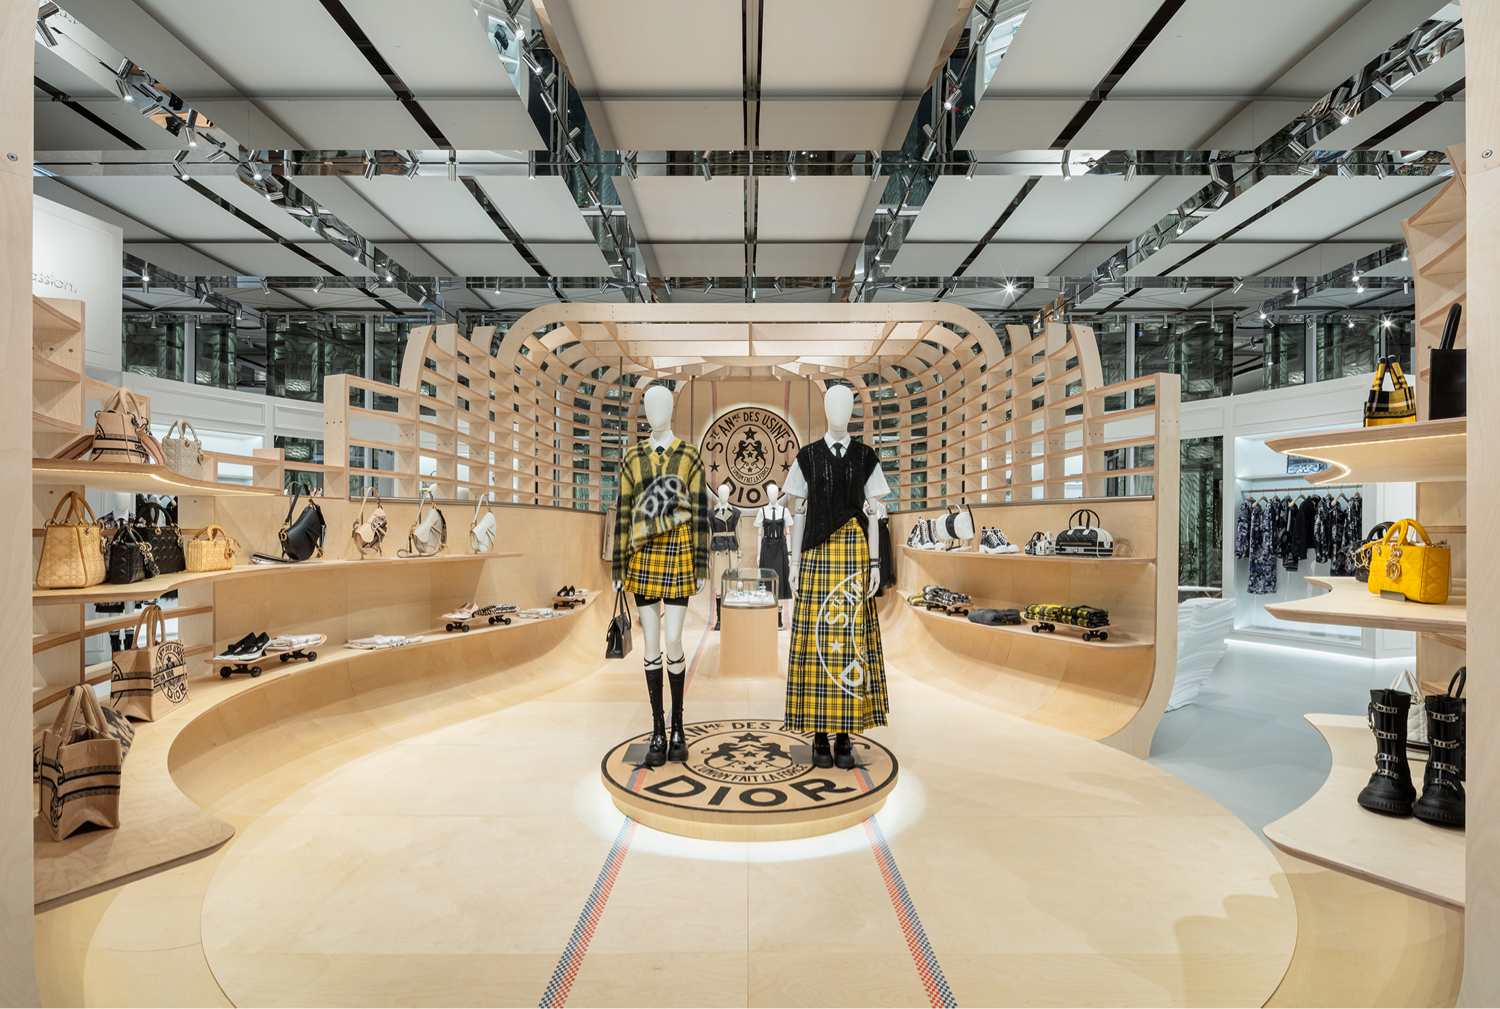 Sail-like panels based on drapery envelope Dior shop in Seoul